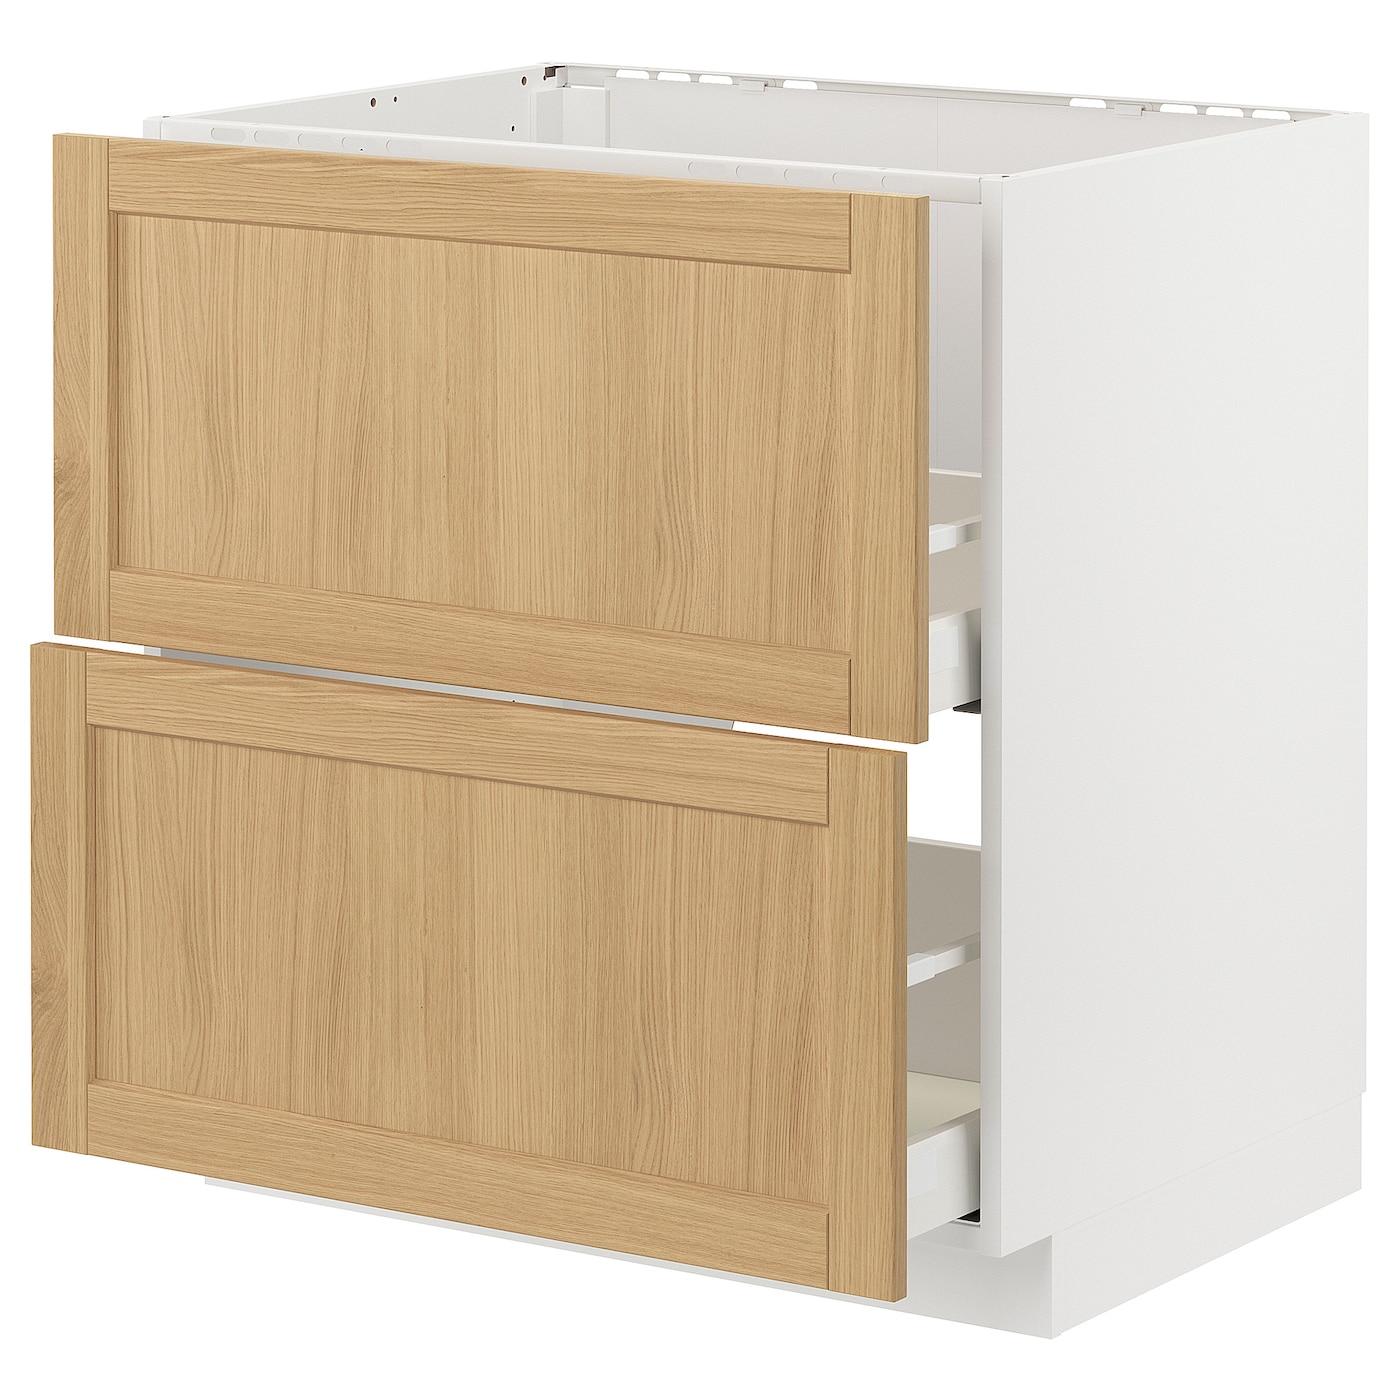 Навесной шкаф - METOD / MAXIMERA IKEA/ МЕТОД/ МАКСИМЕРА ИКЕА,  80х60 см, белый/ под беленый дуб